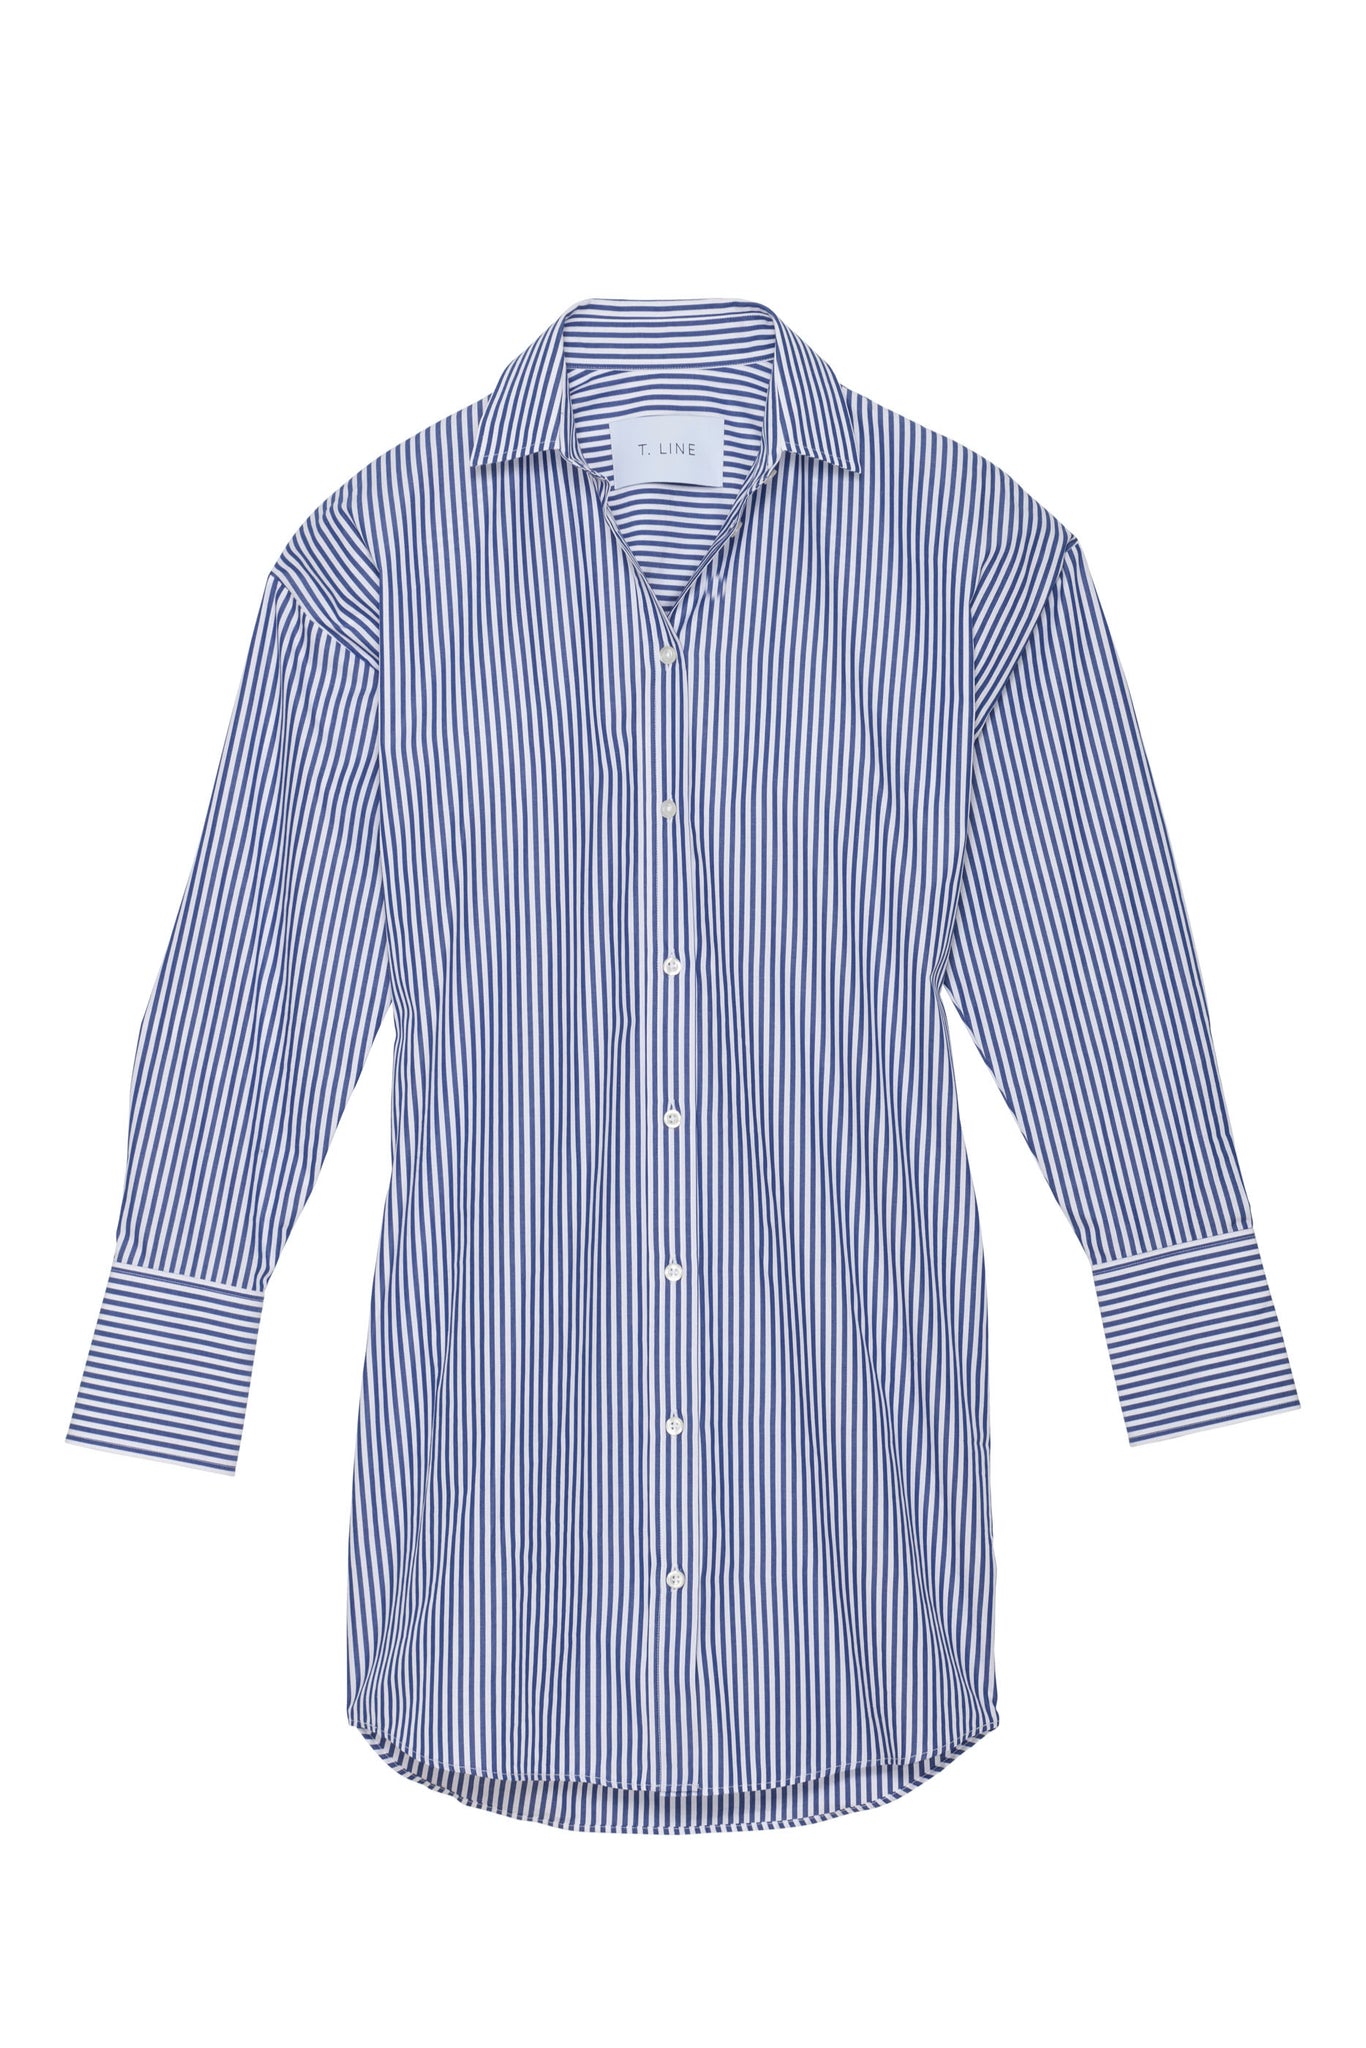 Stella Shirt Dress - Blue Stripe